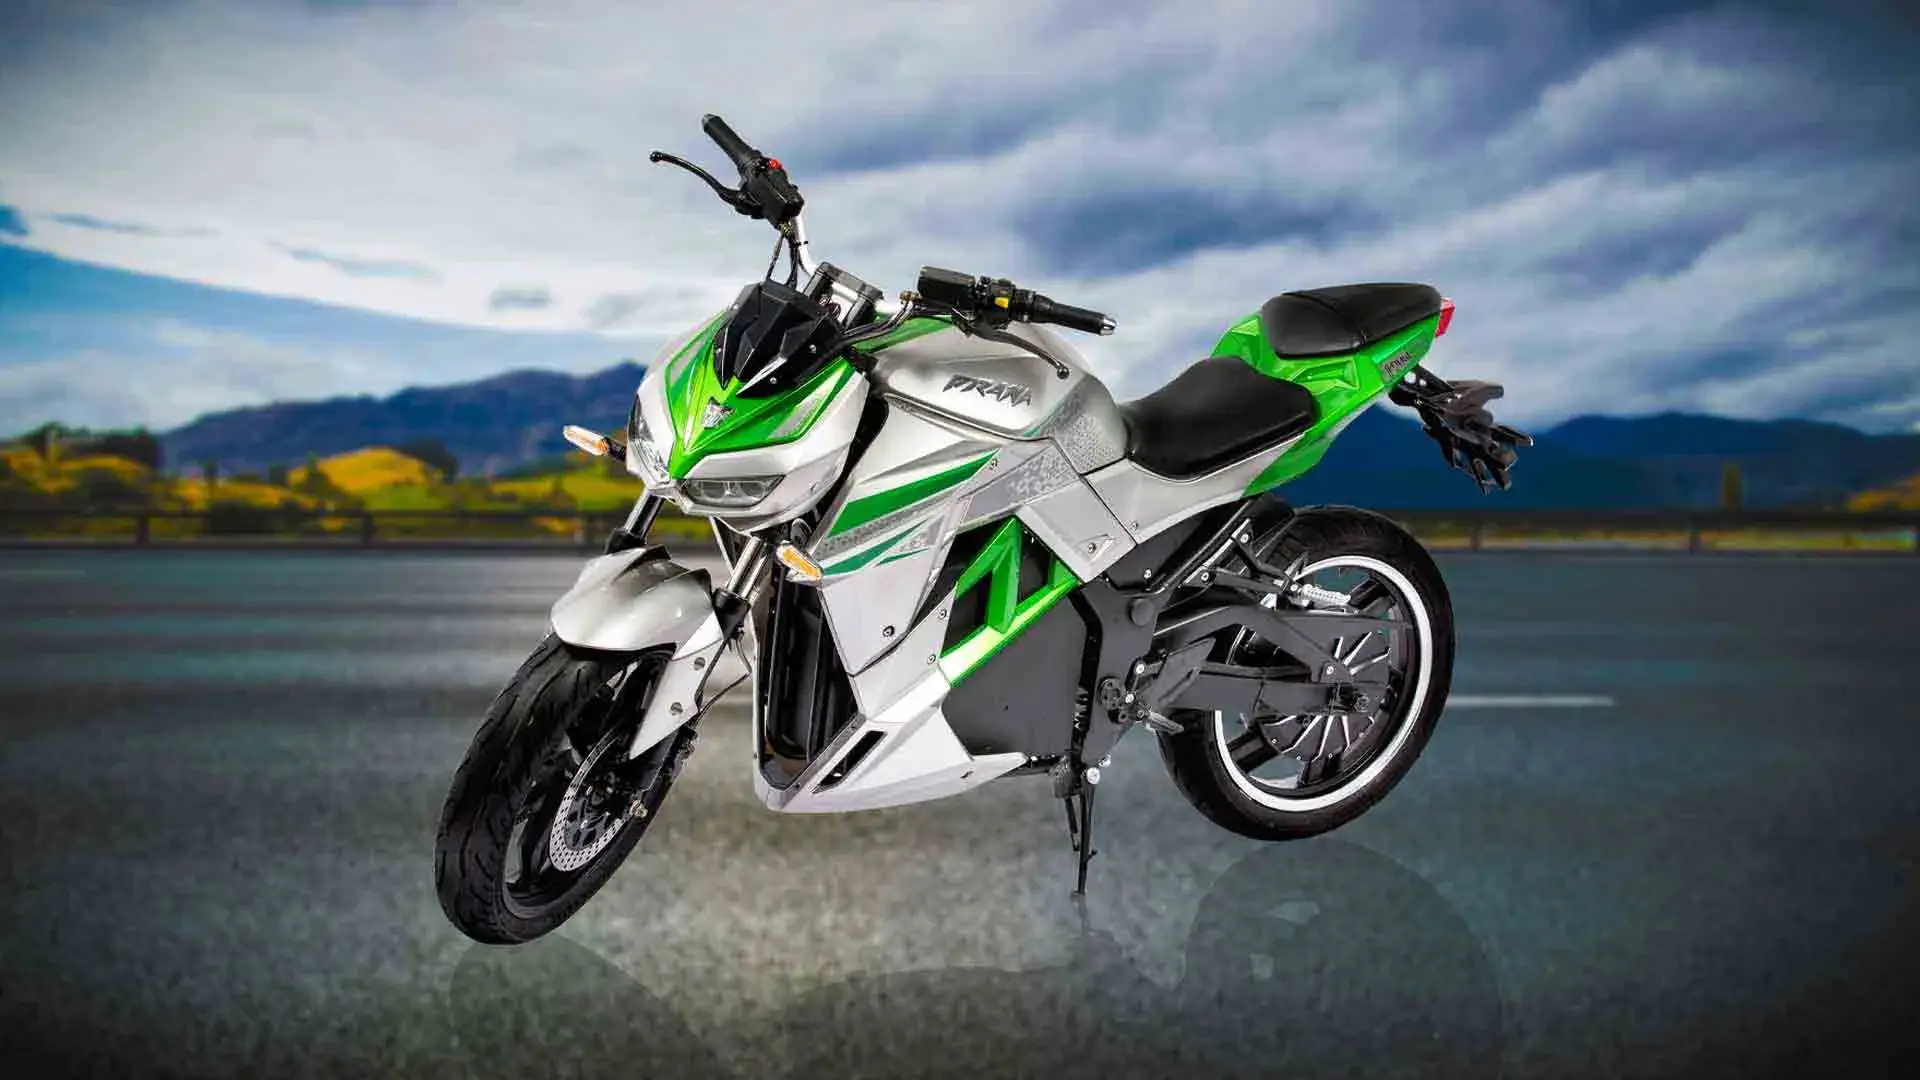 https://e-vehicleinfo.com/srivaru-motors-svm-prana-electric-bike-price-top-features/